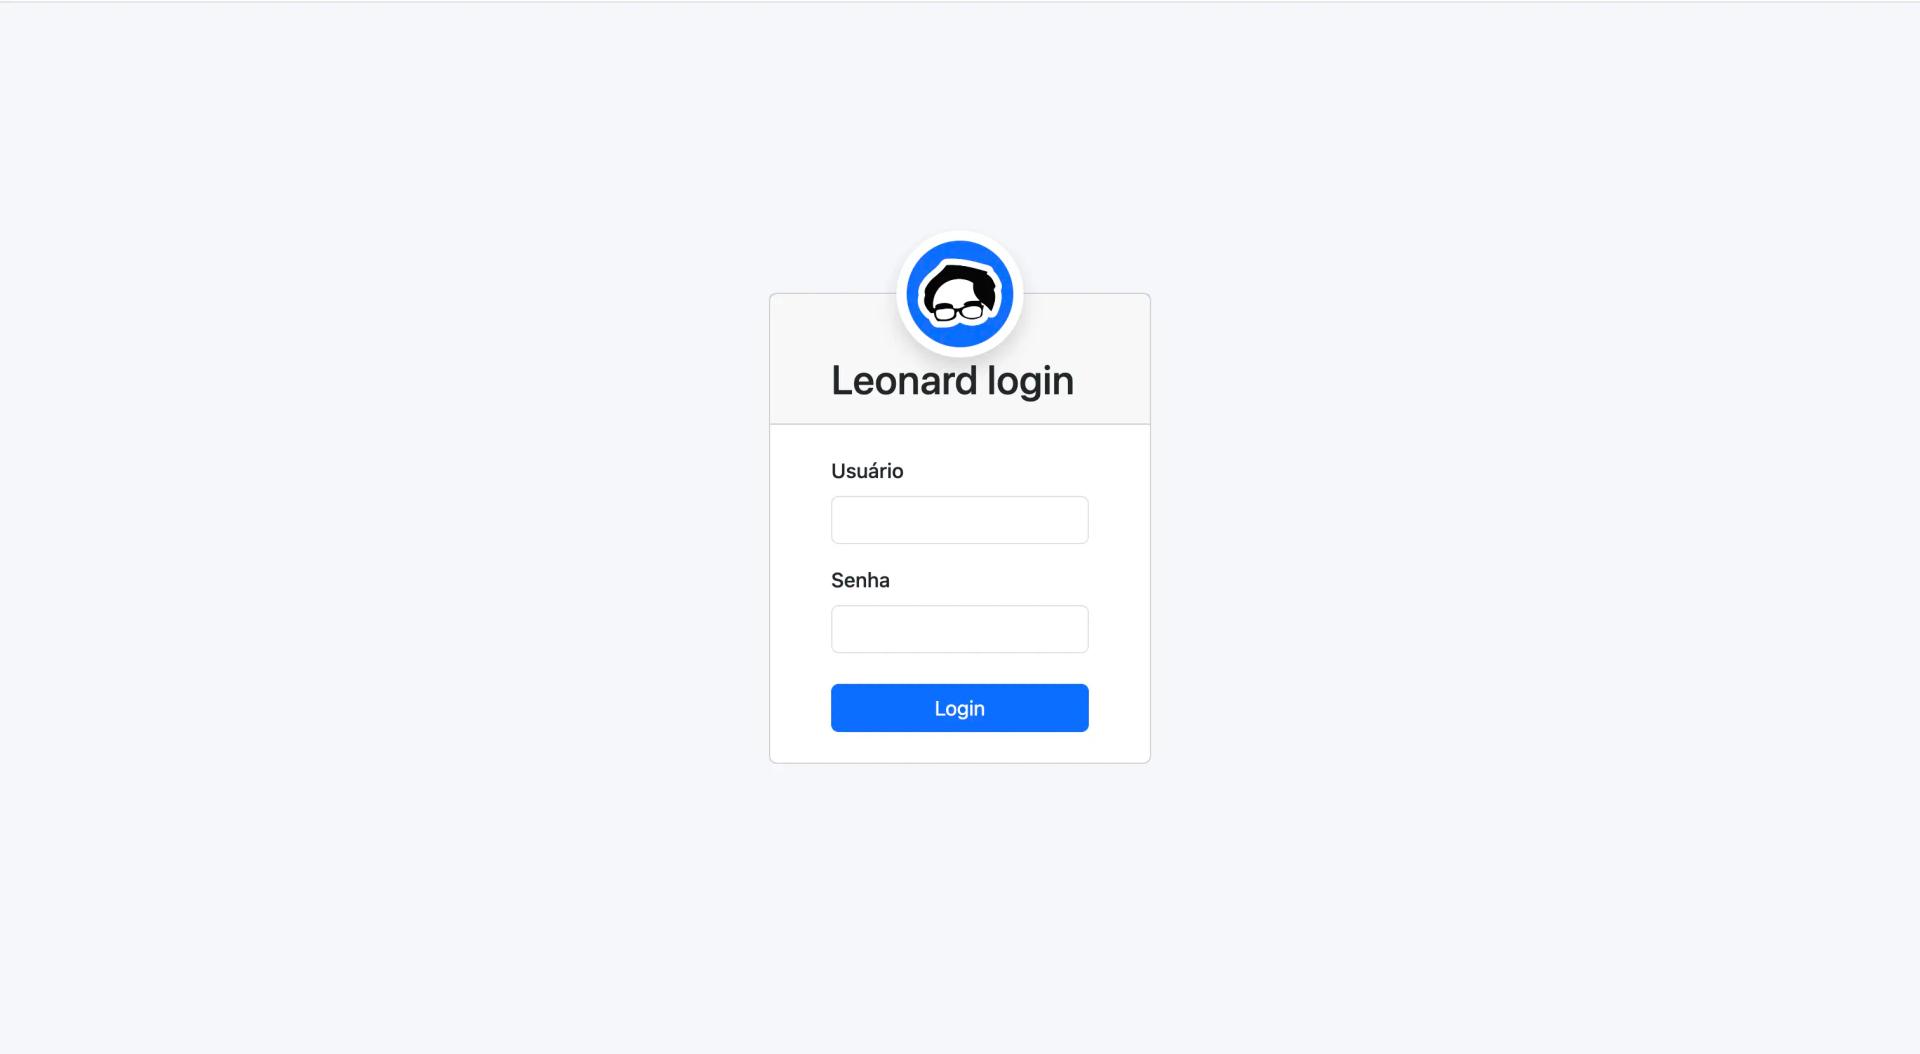 Leonard login screen